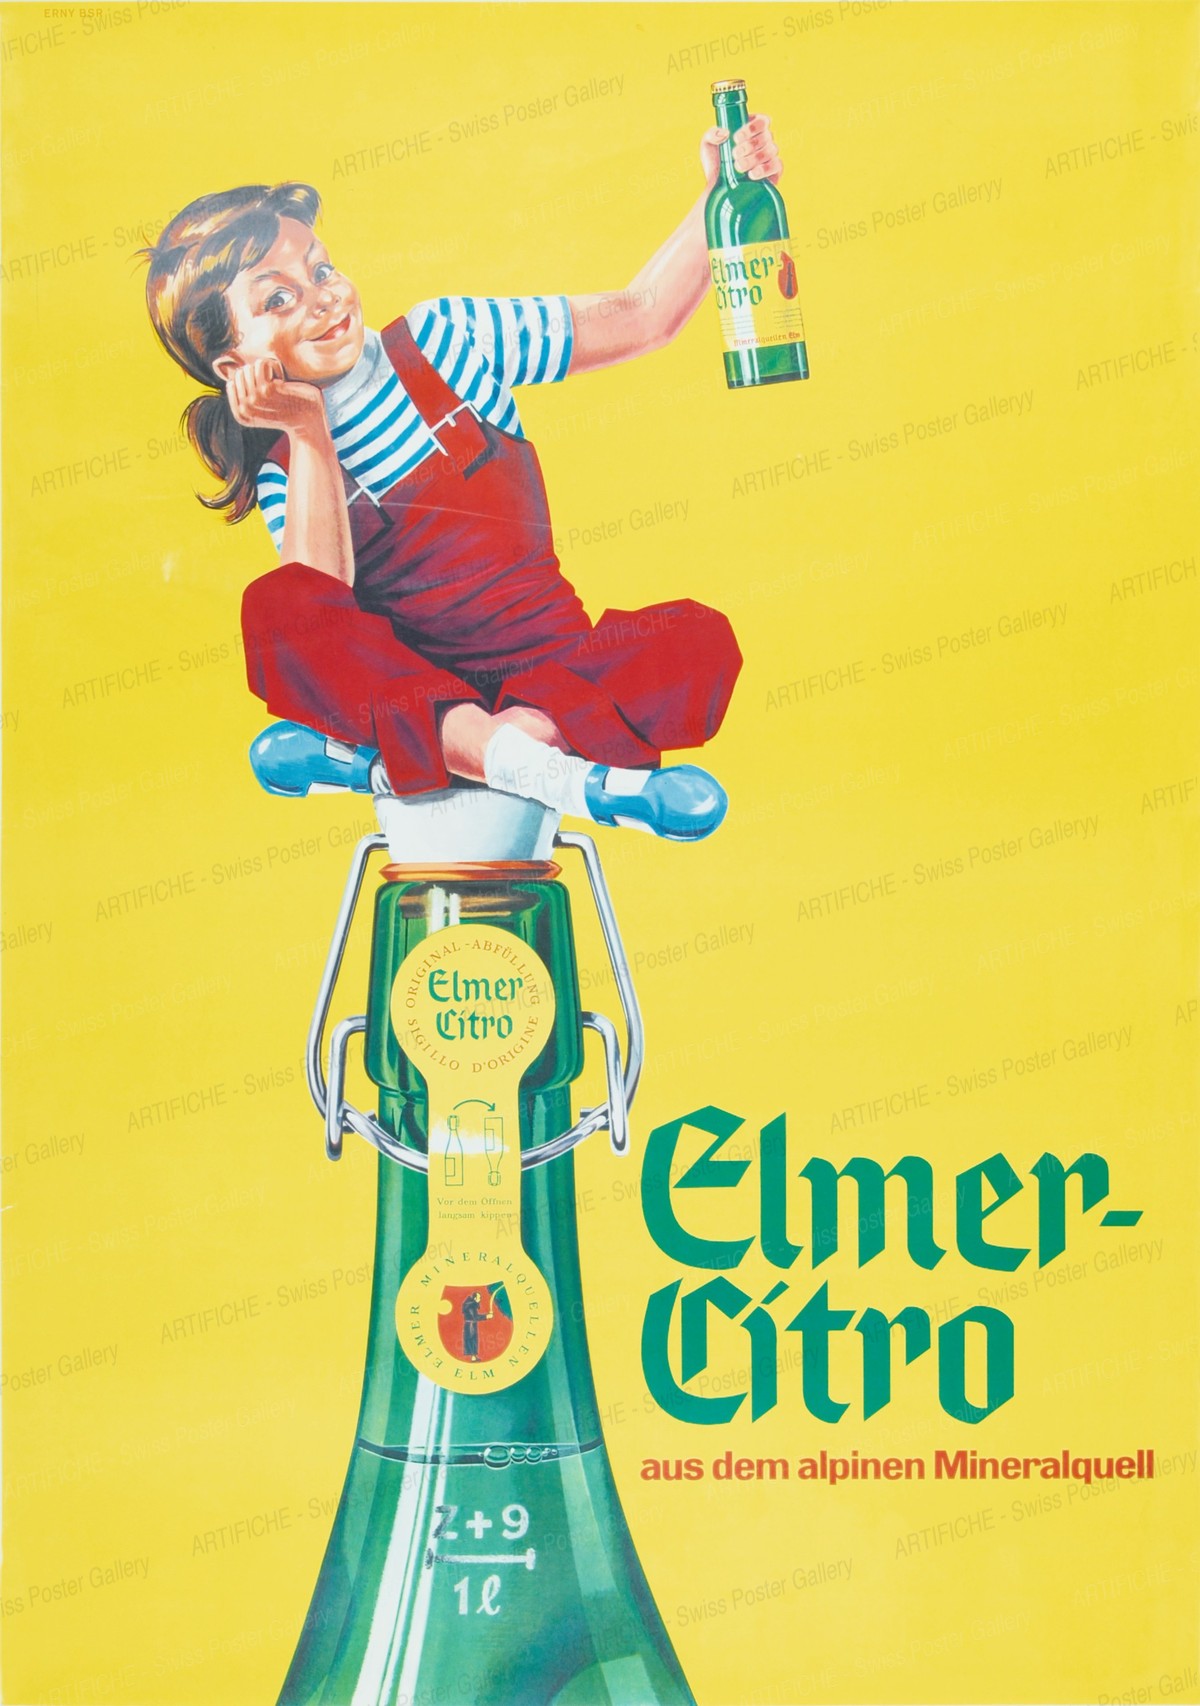 Elmer Citro – aus dem alpinen Mineralquell, Vetsch Atelier